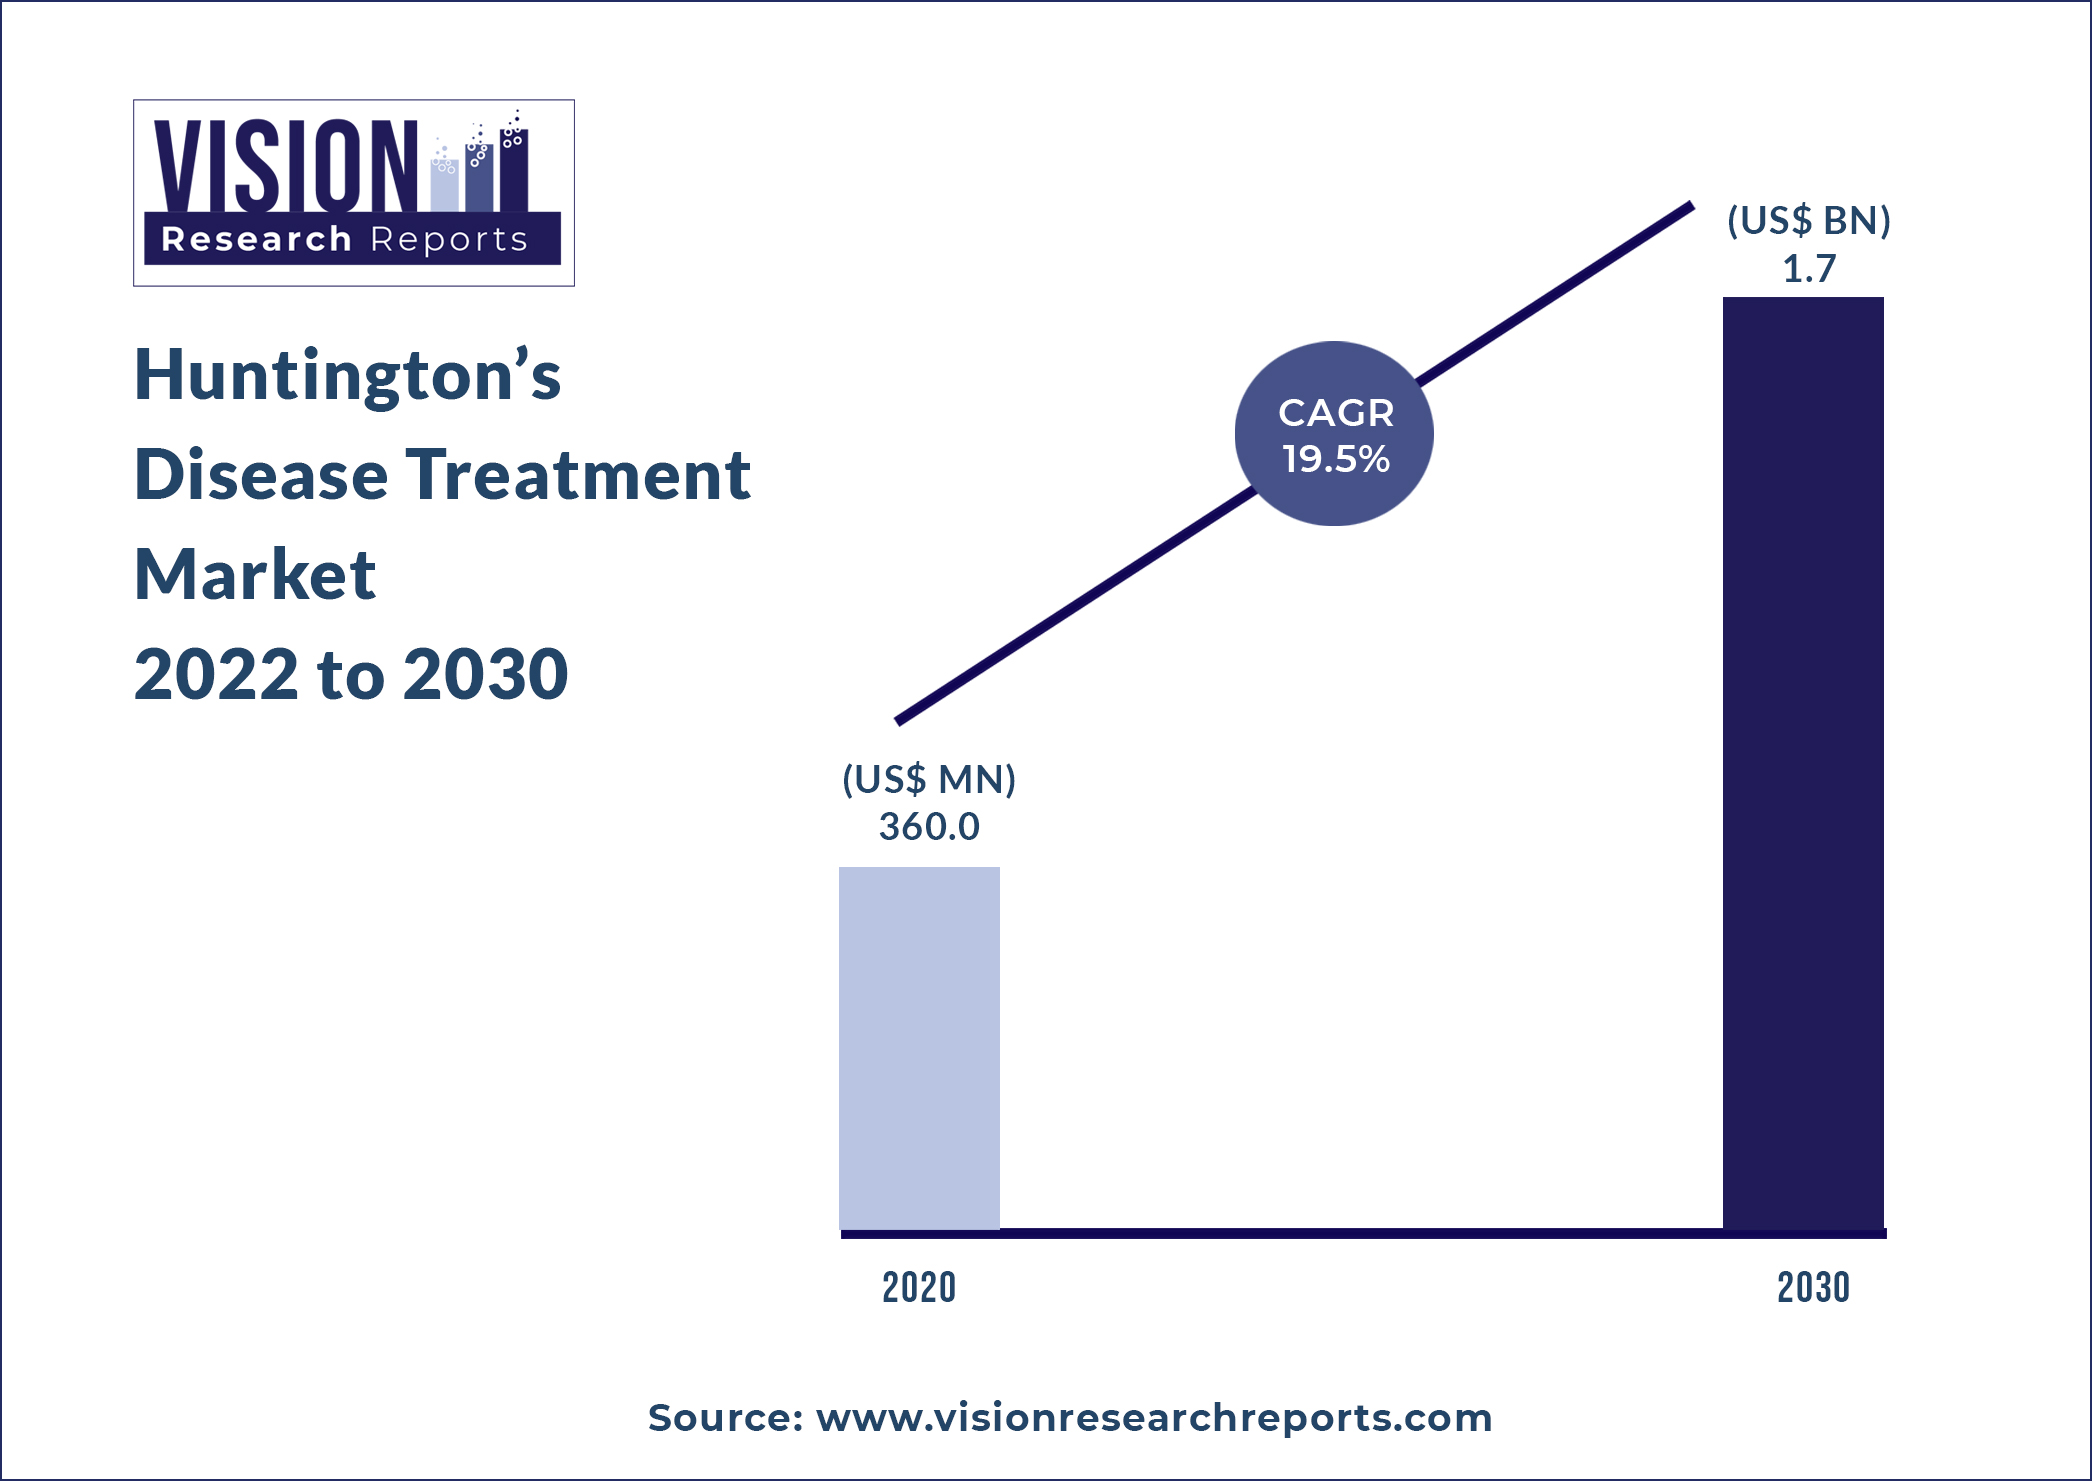 Huntington’s Disease Treatment Market Size 2022 to 2030